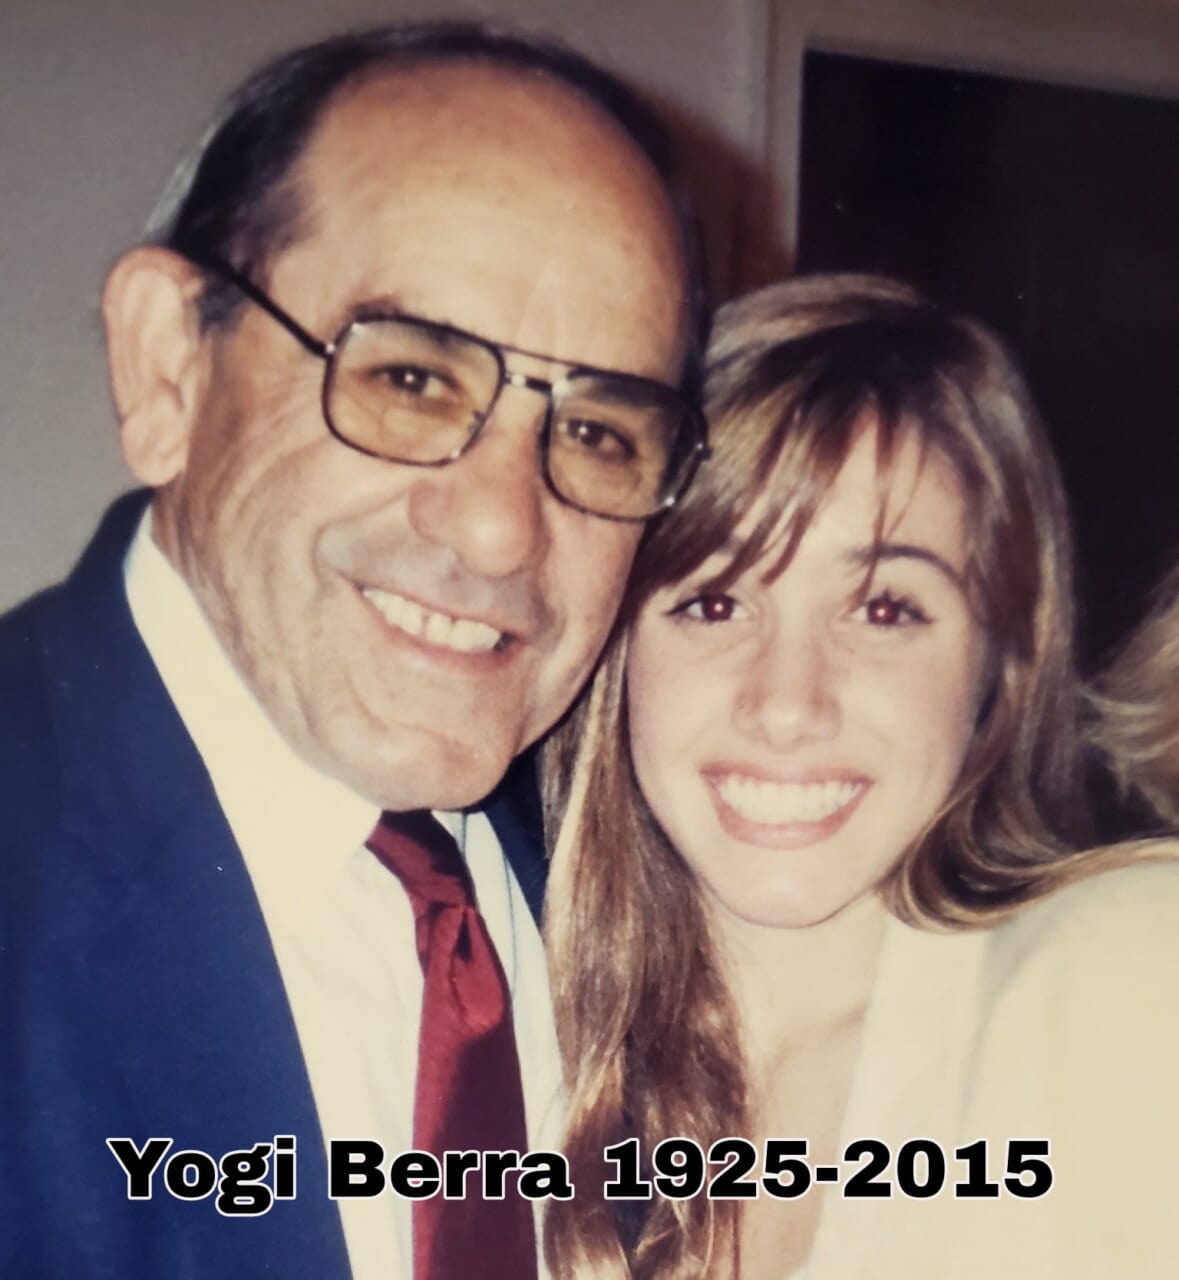 New York Yankee Legends: Yogi Berra would be 96 today